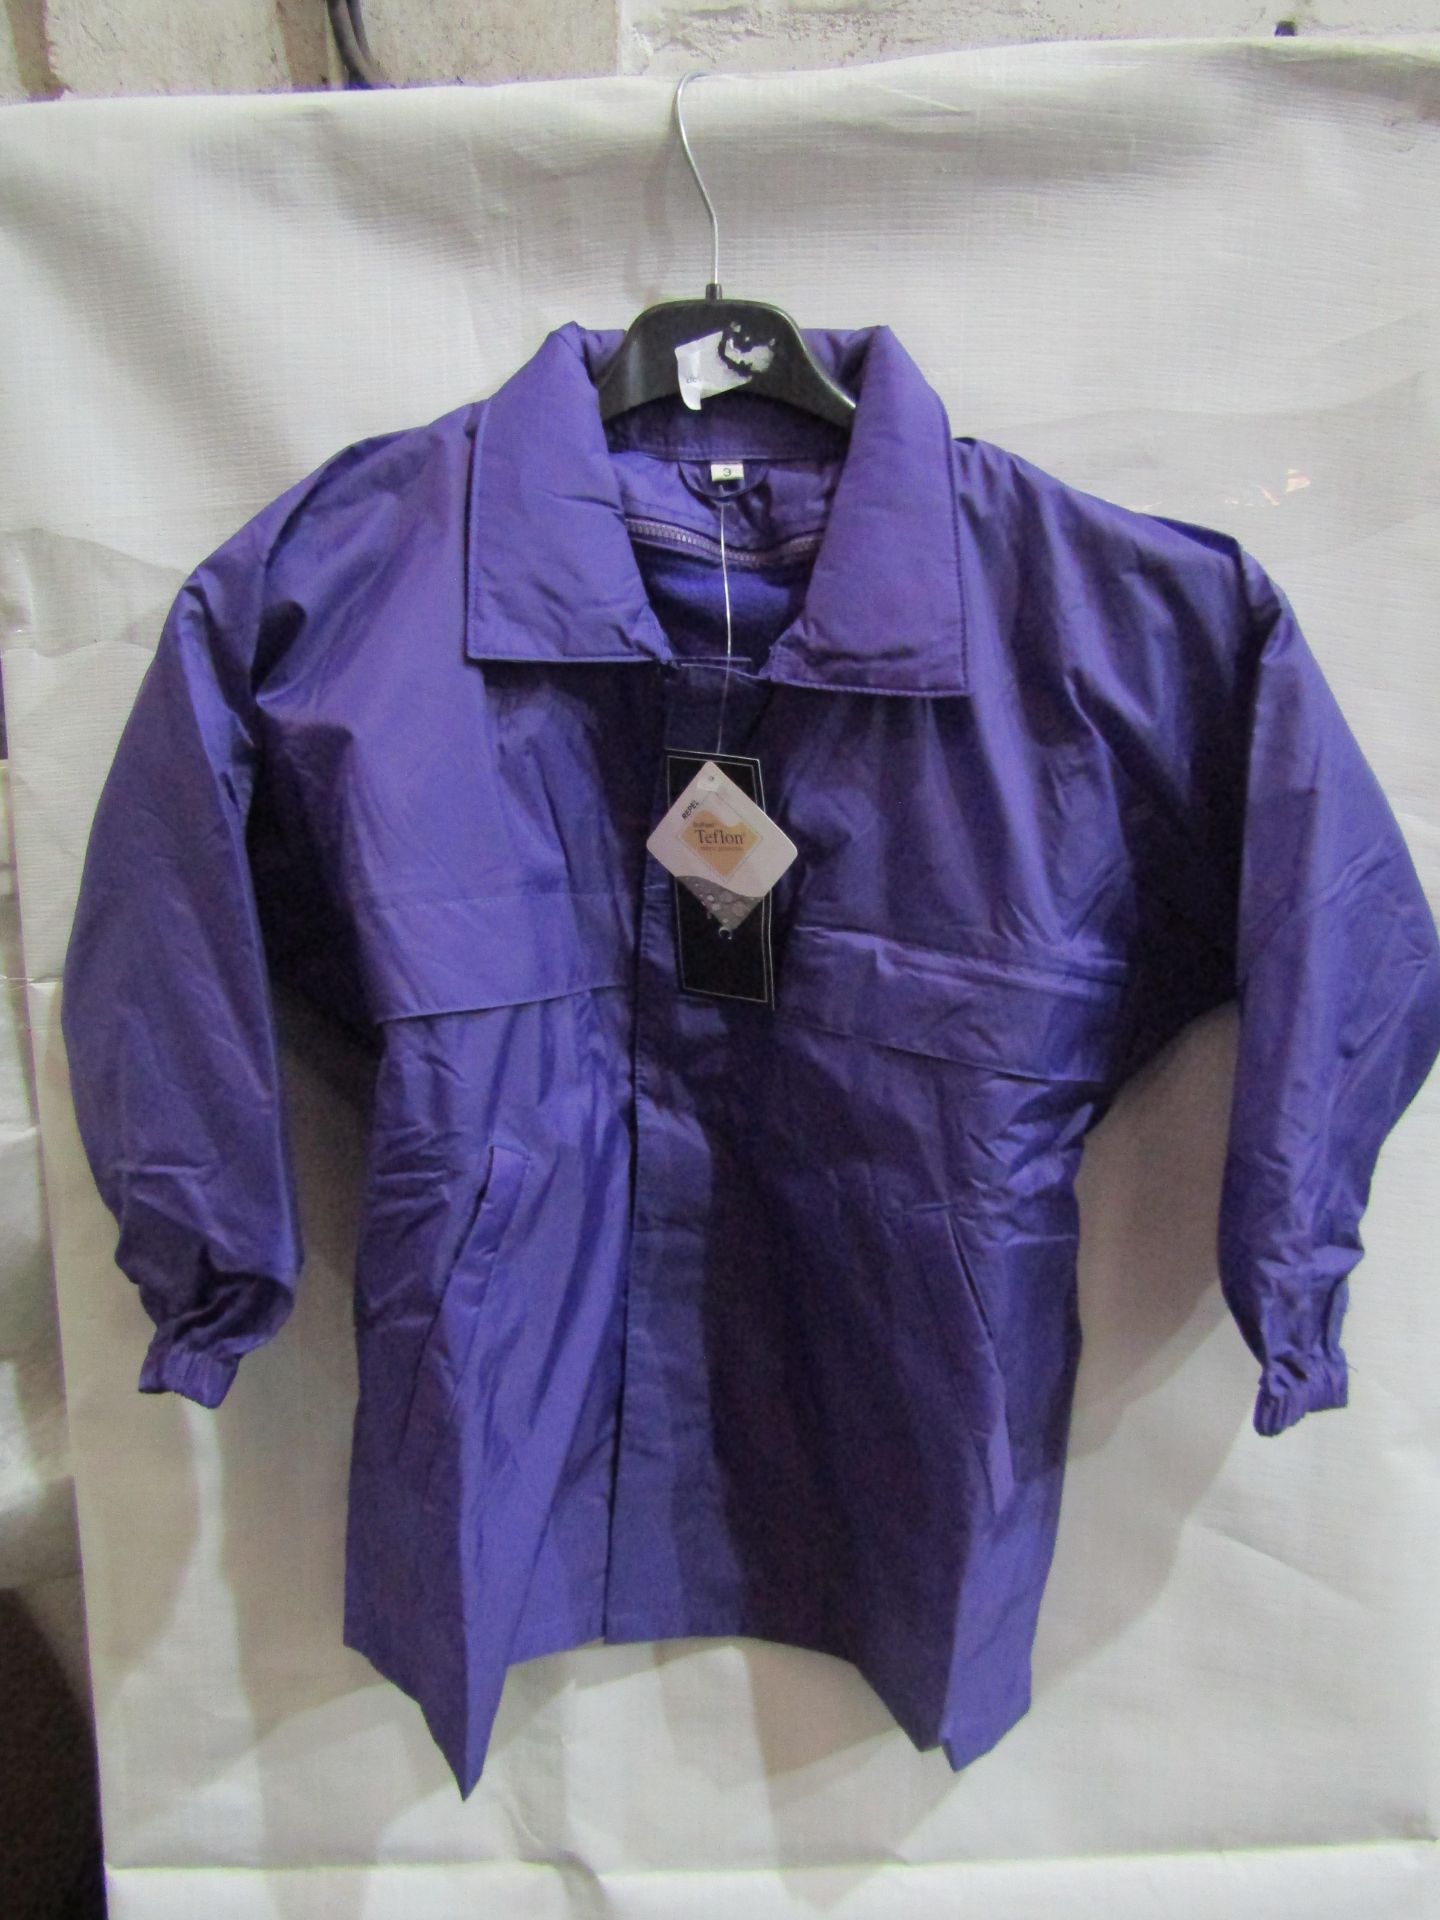 Rainmac Childrens Purple Rain Coat With Detachable Lined Fleece, Size: 4 - Unused & Packaged.